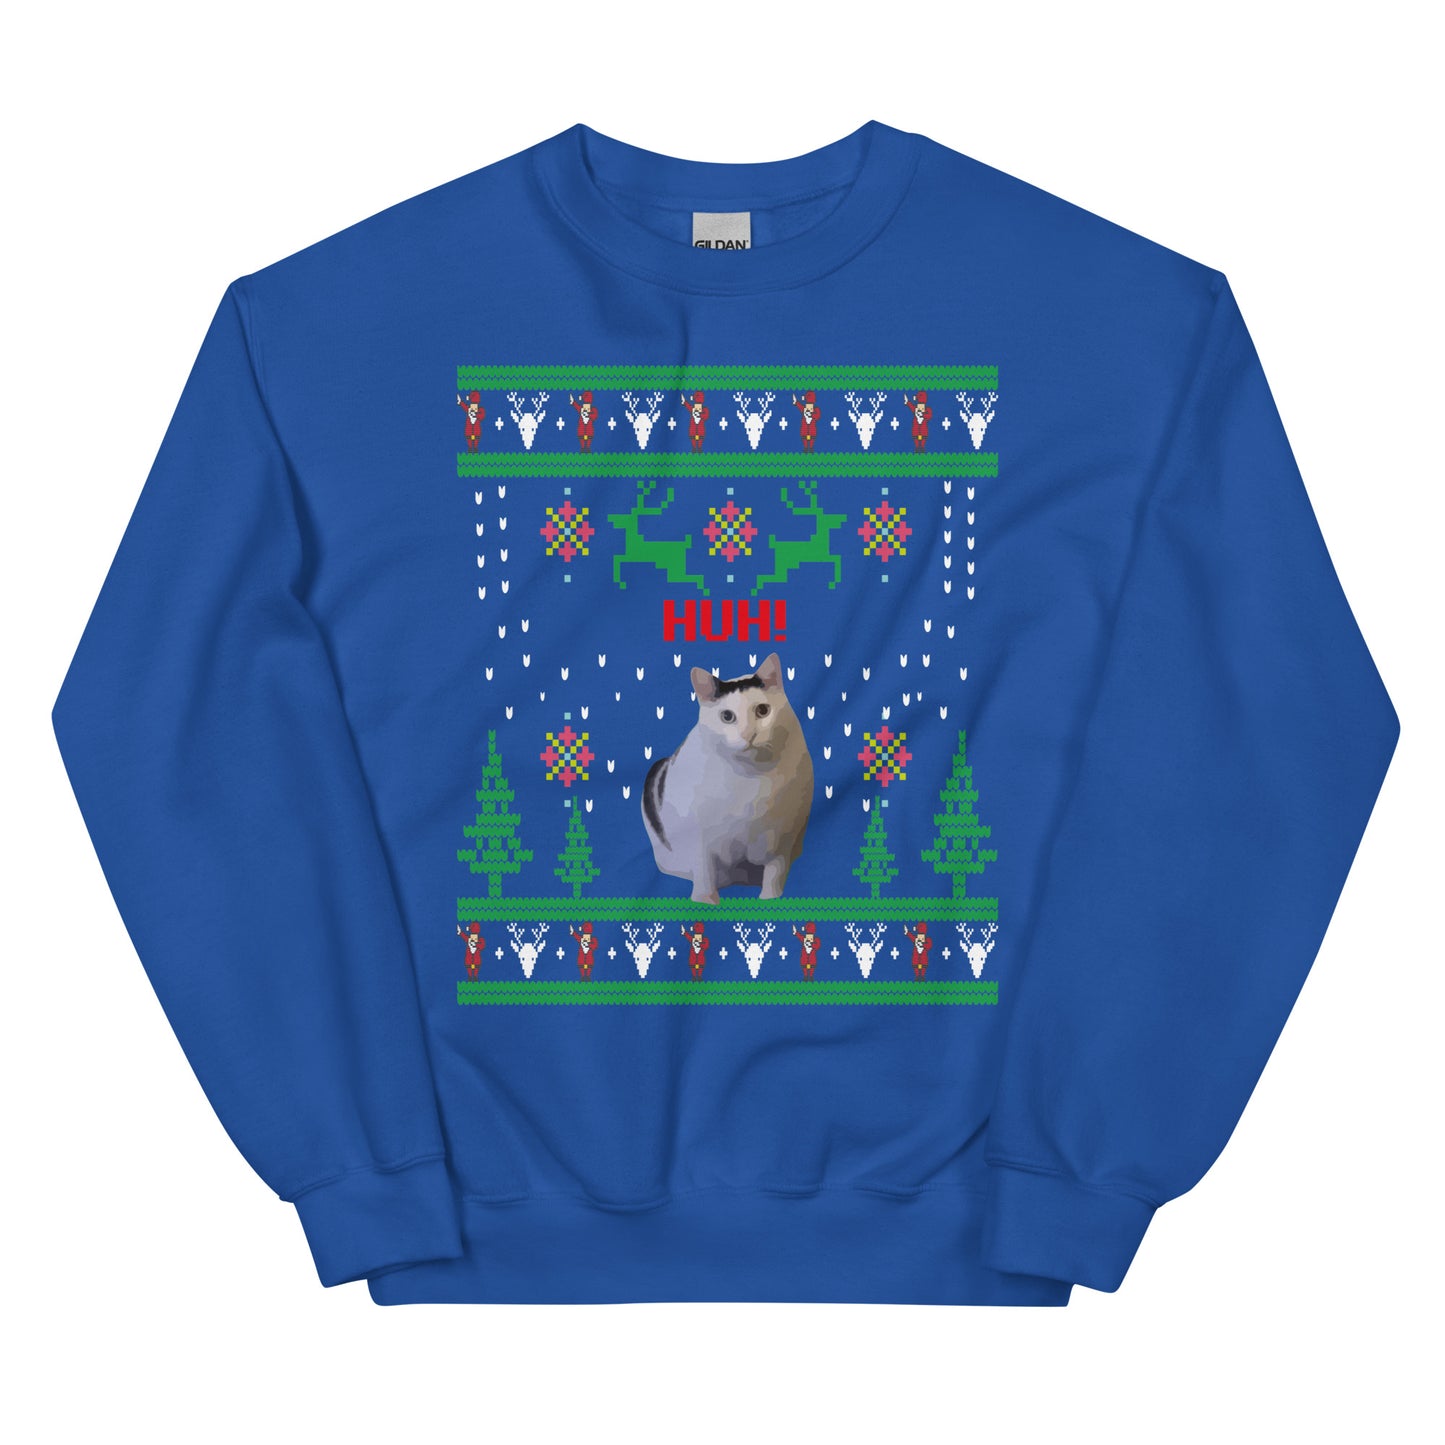 Huh! Cat meme, Popular Internet Meme CAT DAY Christmas  Unisex Sweatshirt